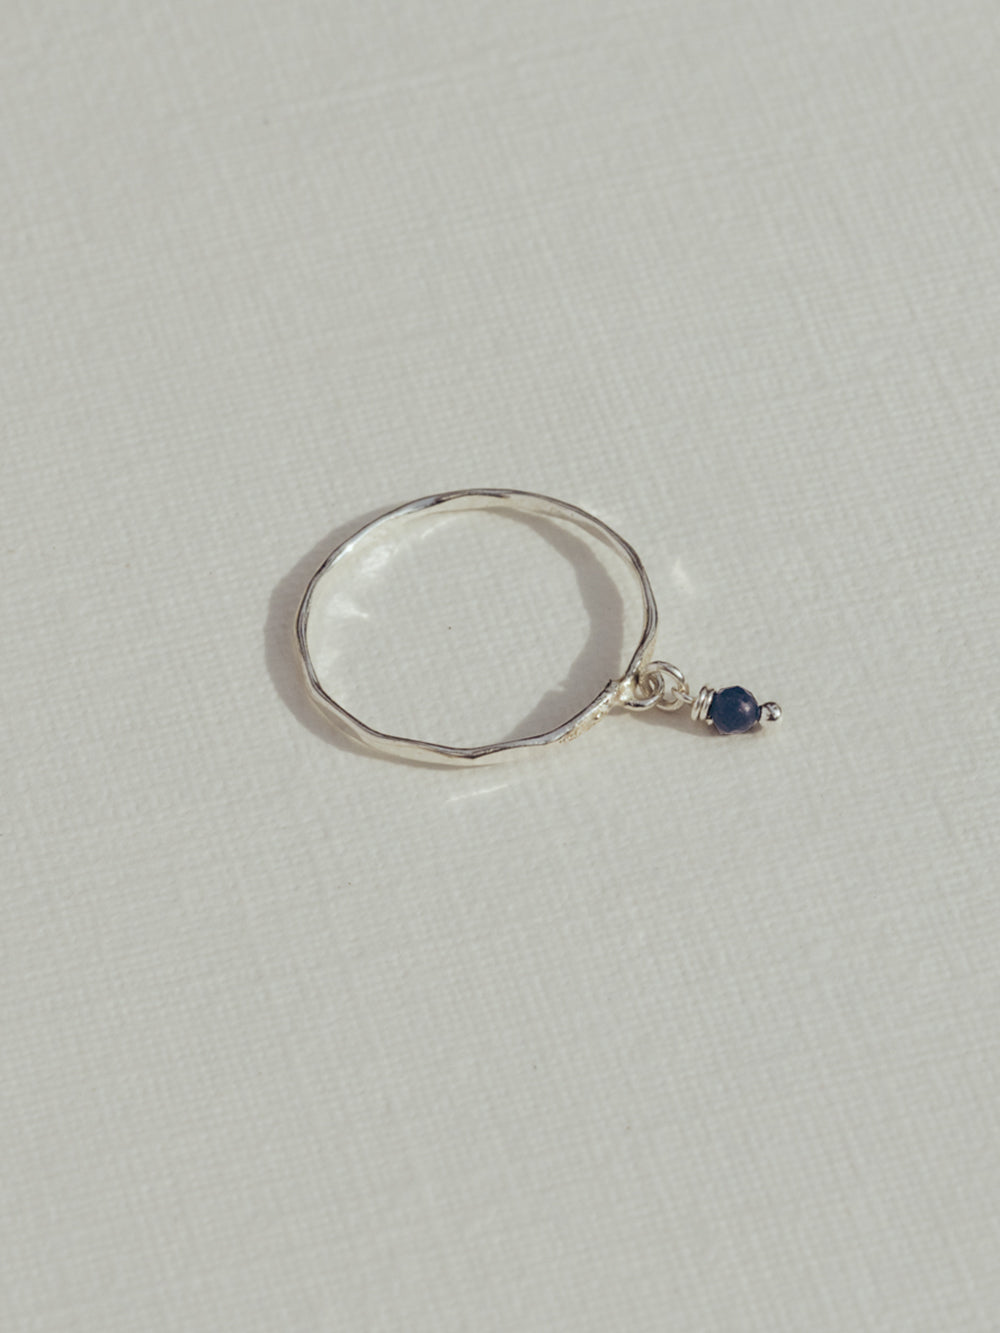 Birthstone ring September - Sapphire | 925 Sterling Silver